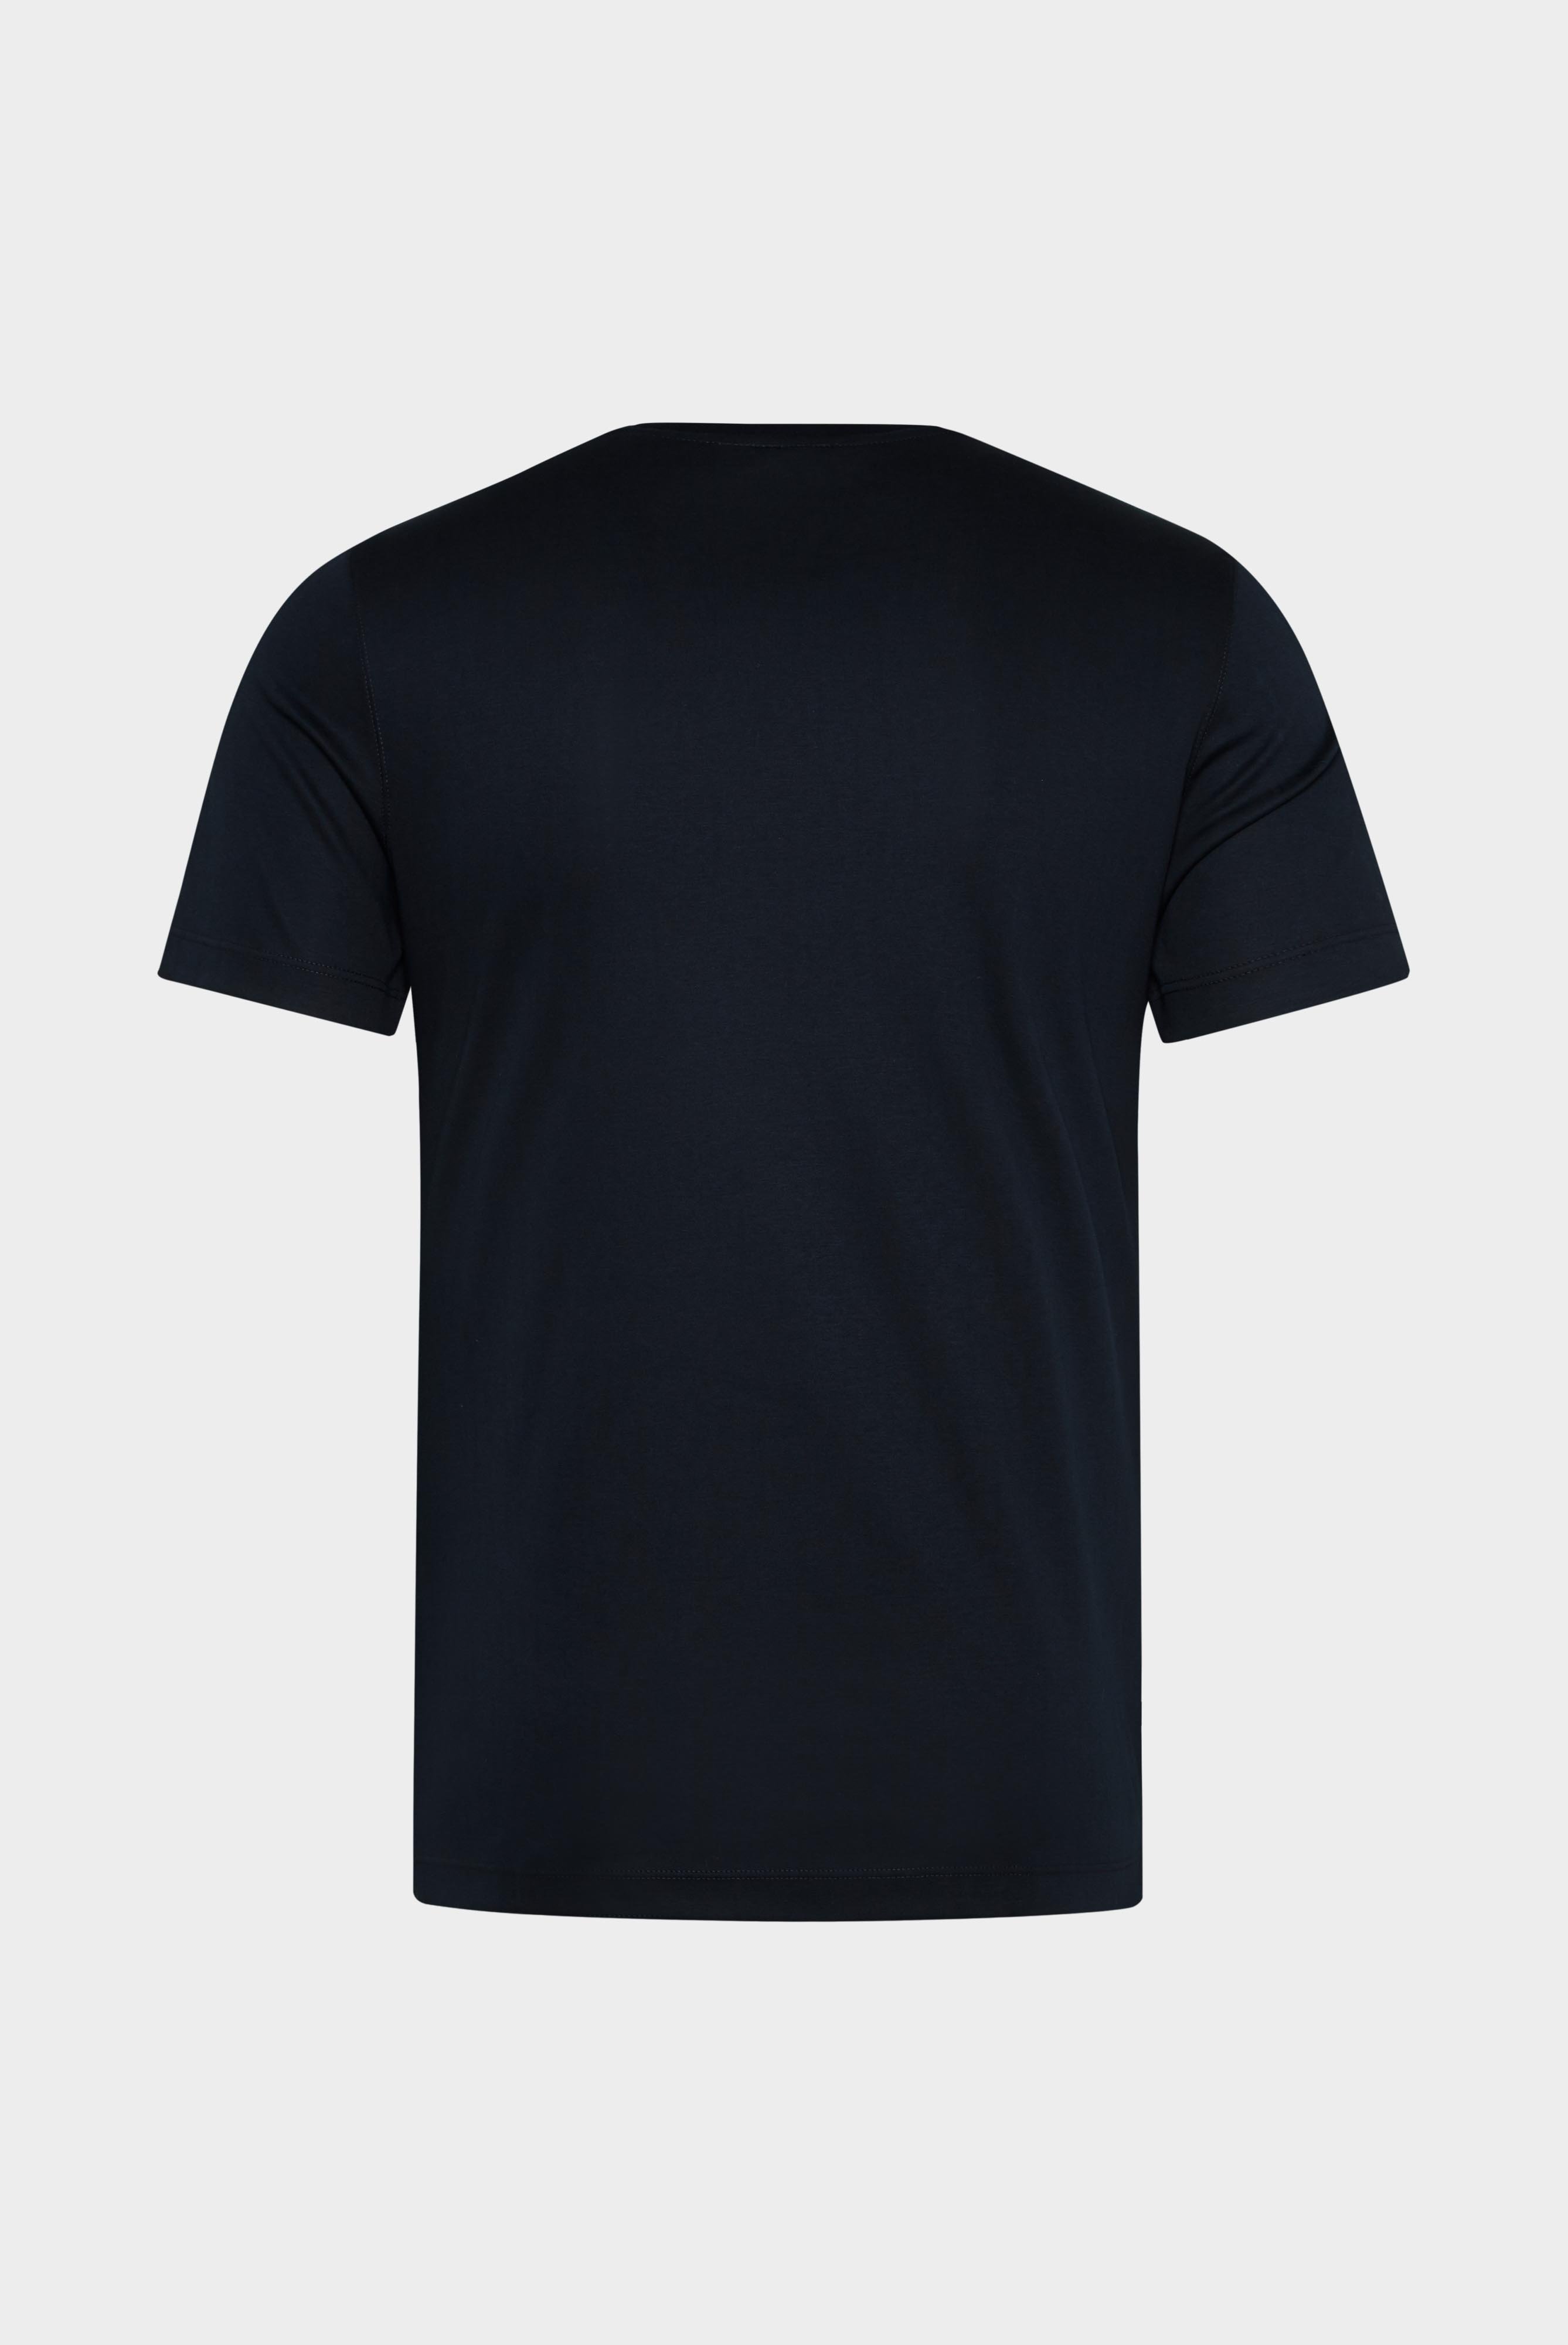 T-Shirts+Swiss Cotton Jersey Crew Neck T-Shirt+20.1717.UX.180031.790.X3L